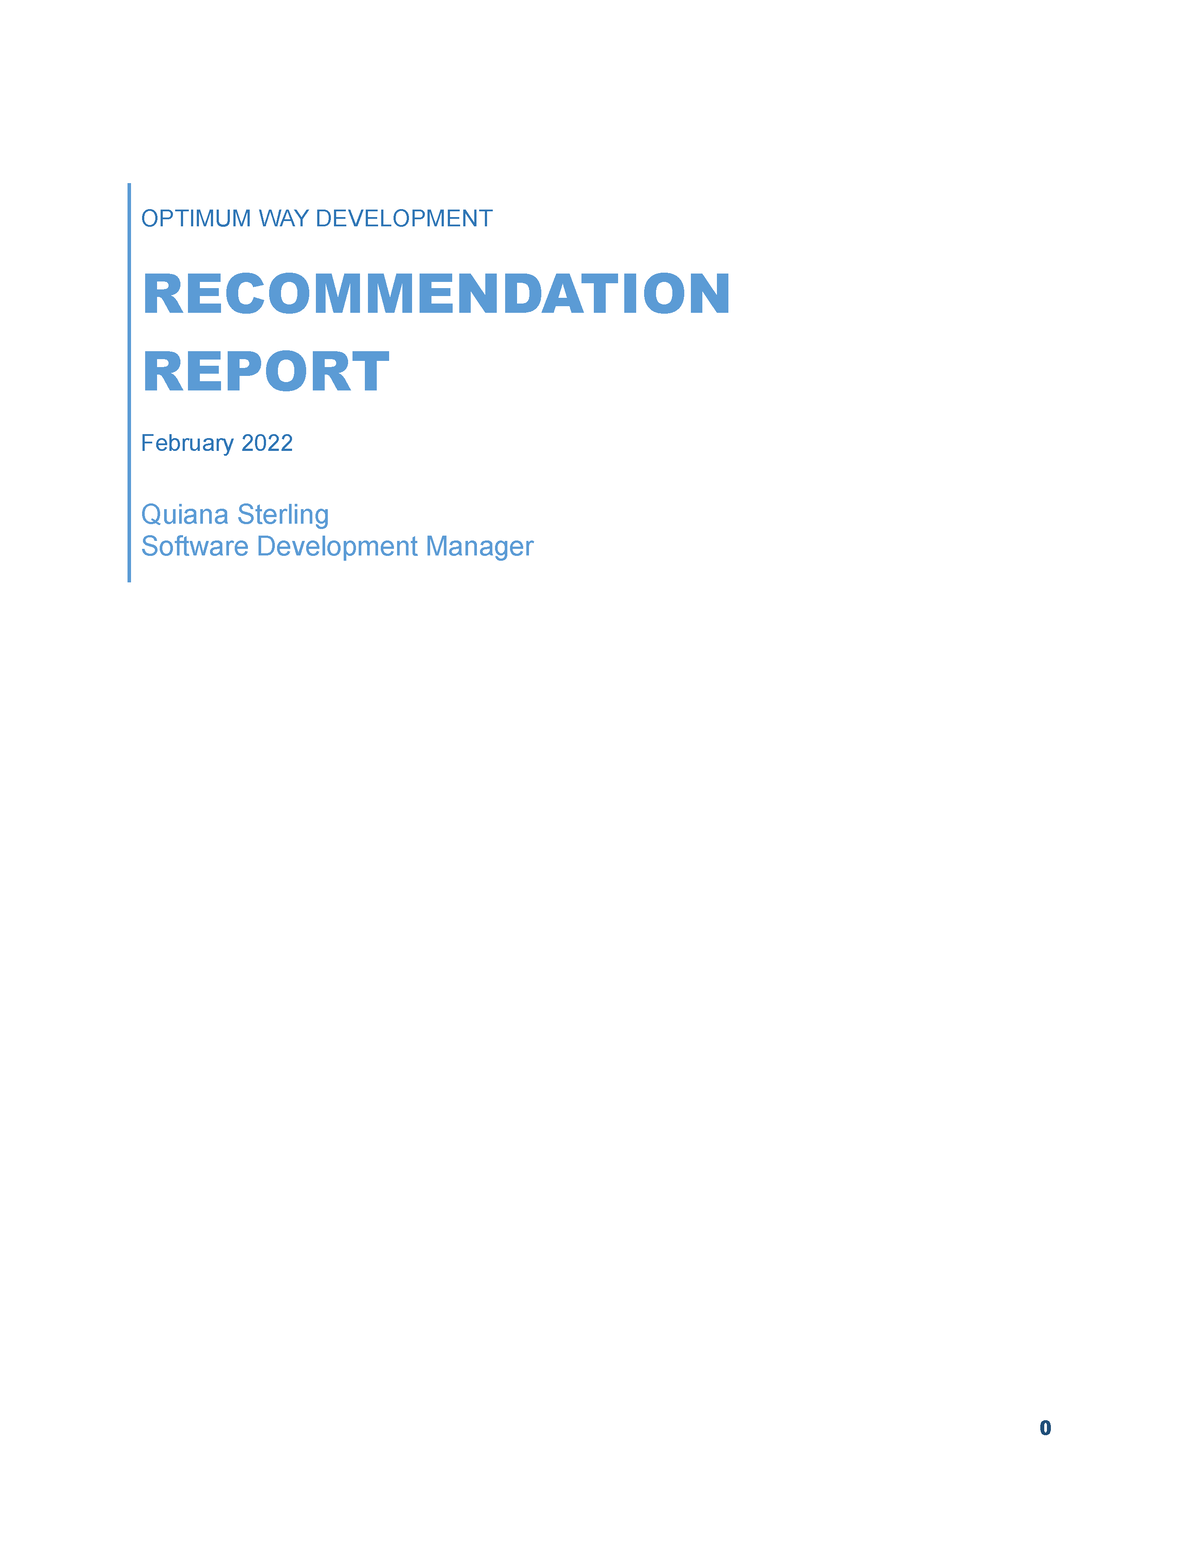 Project 2 - Recommendation Report - OPTIMUM WAY DEVELOPMENT ...